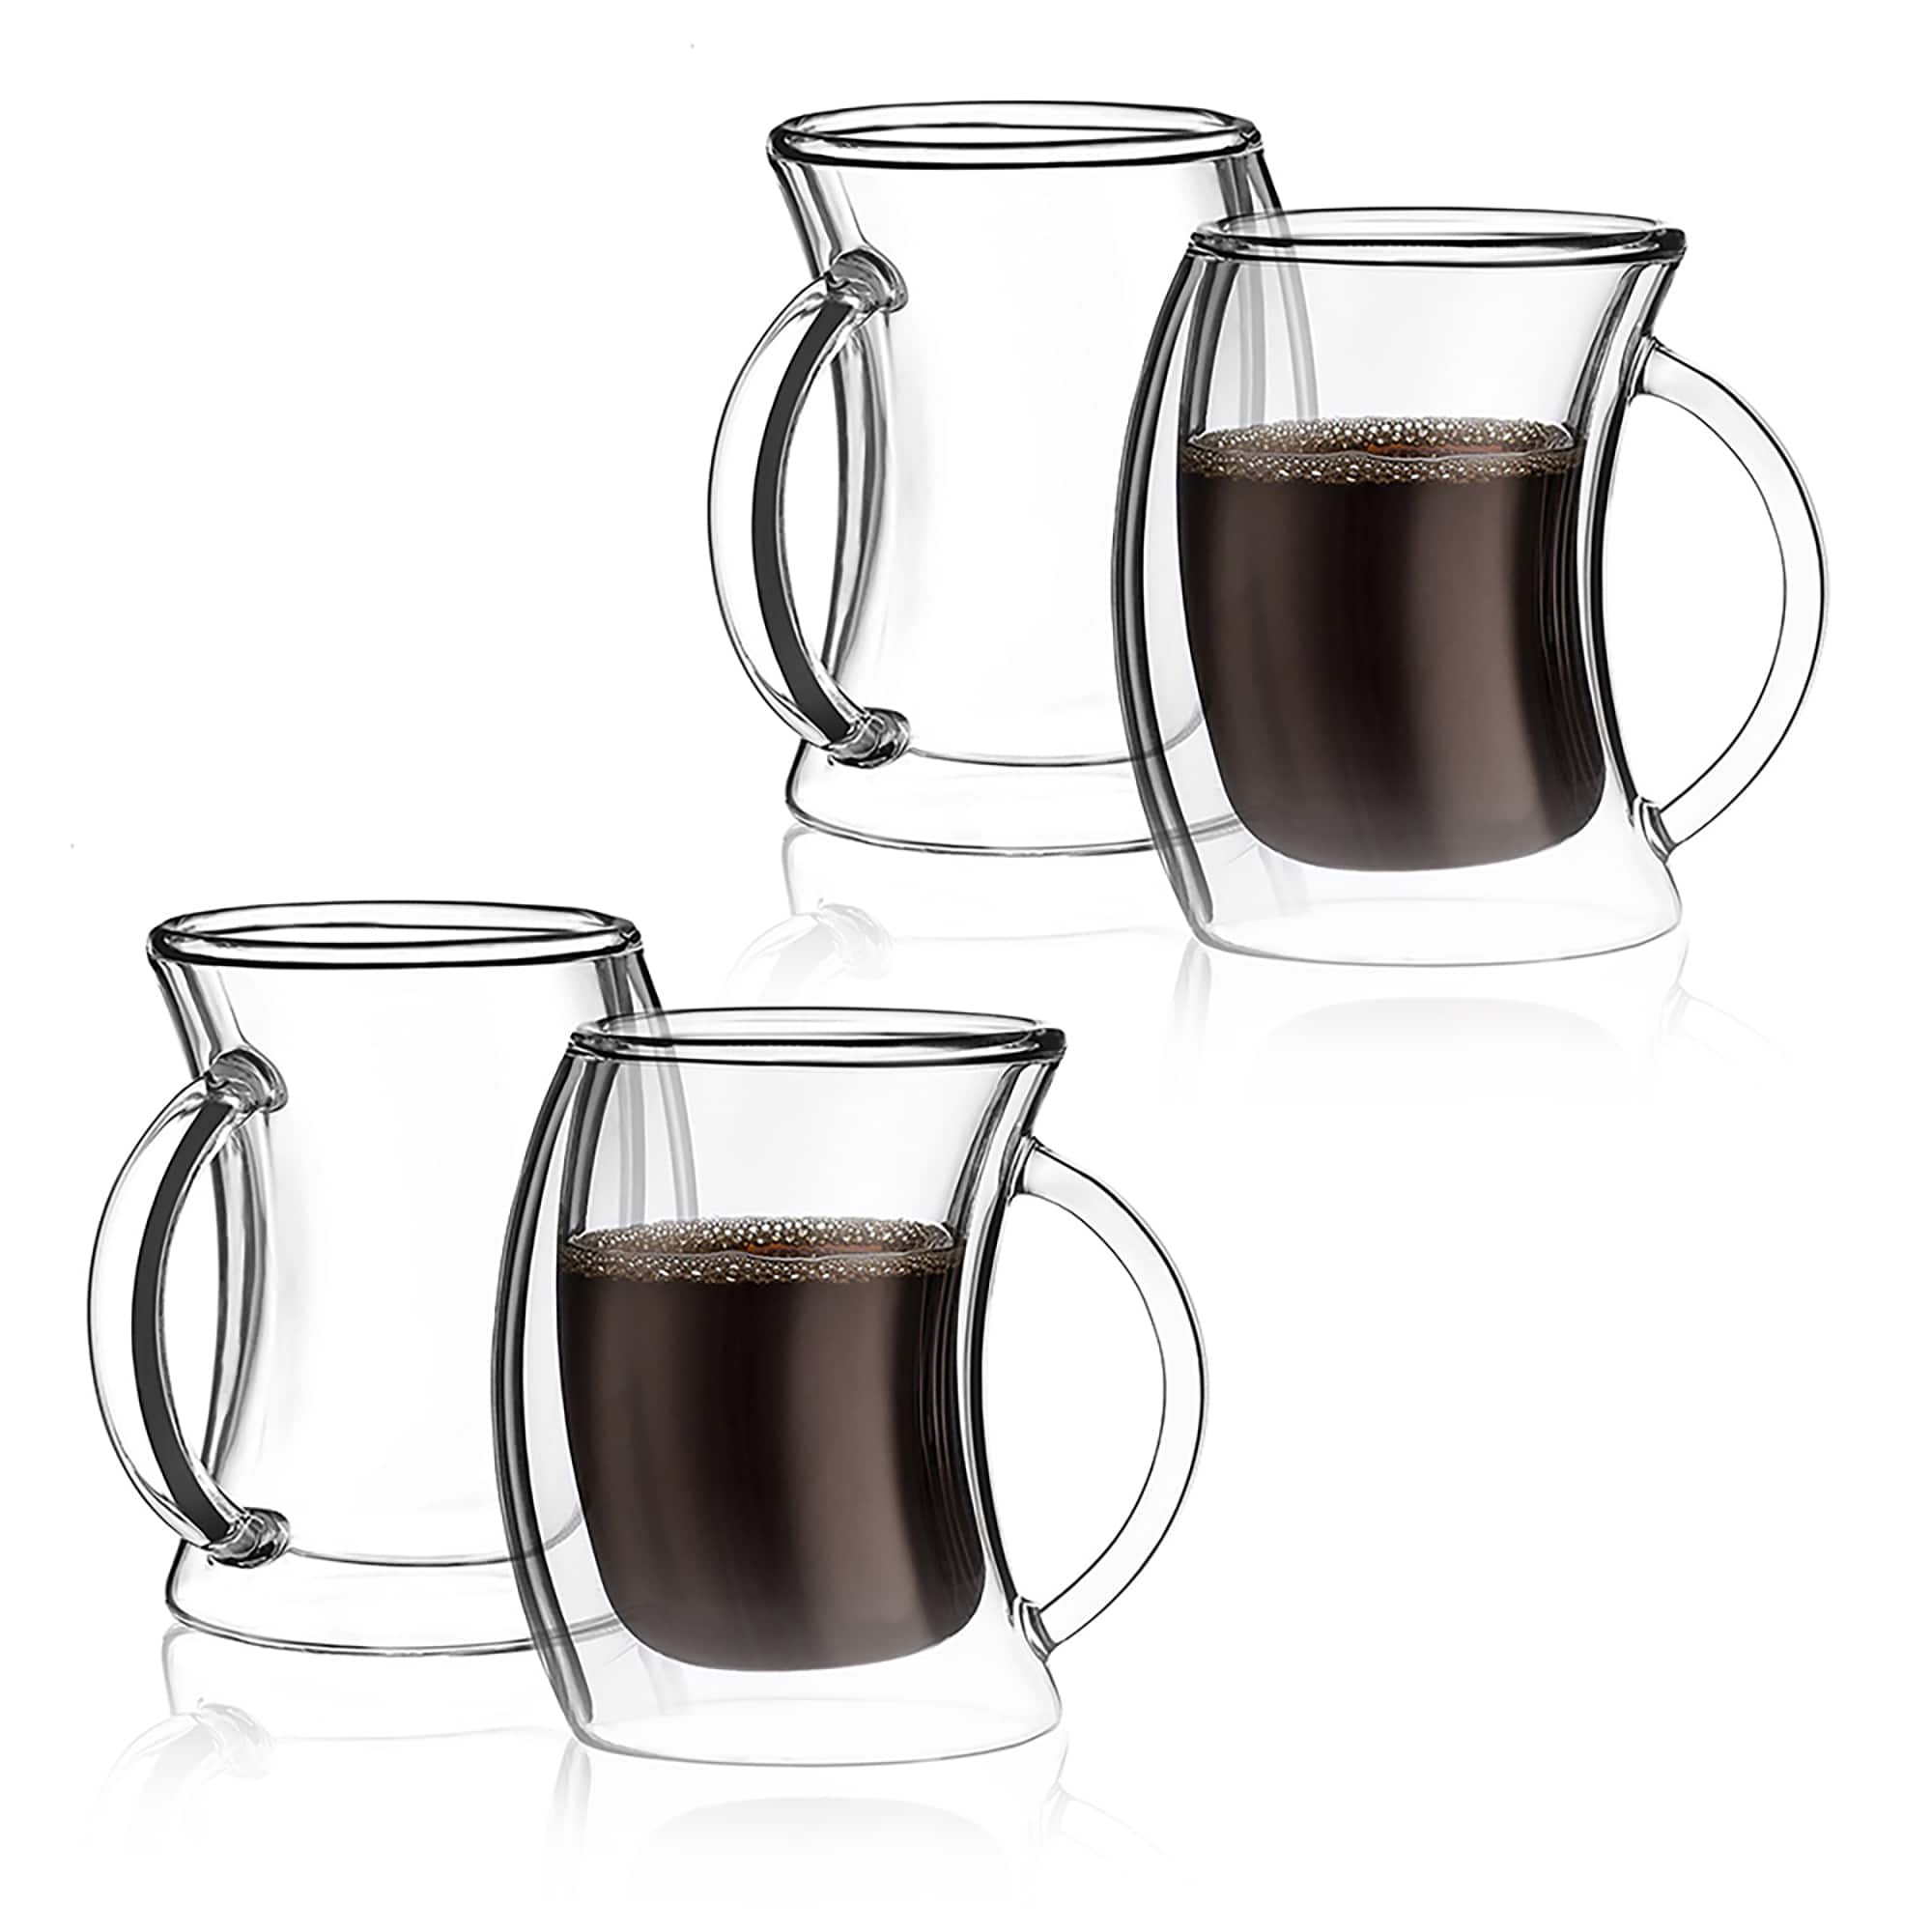 JoyJolt Glass Espresso Cup & Reviews